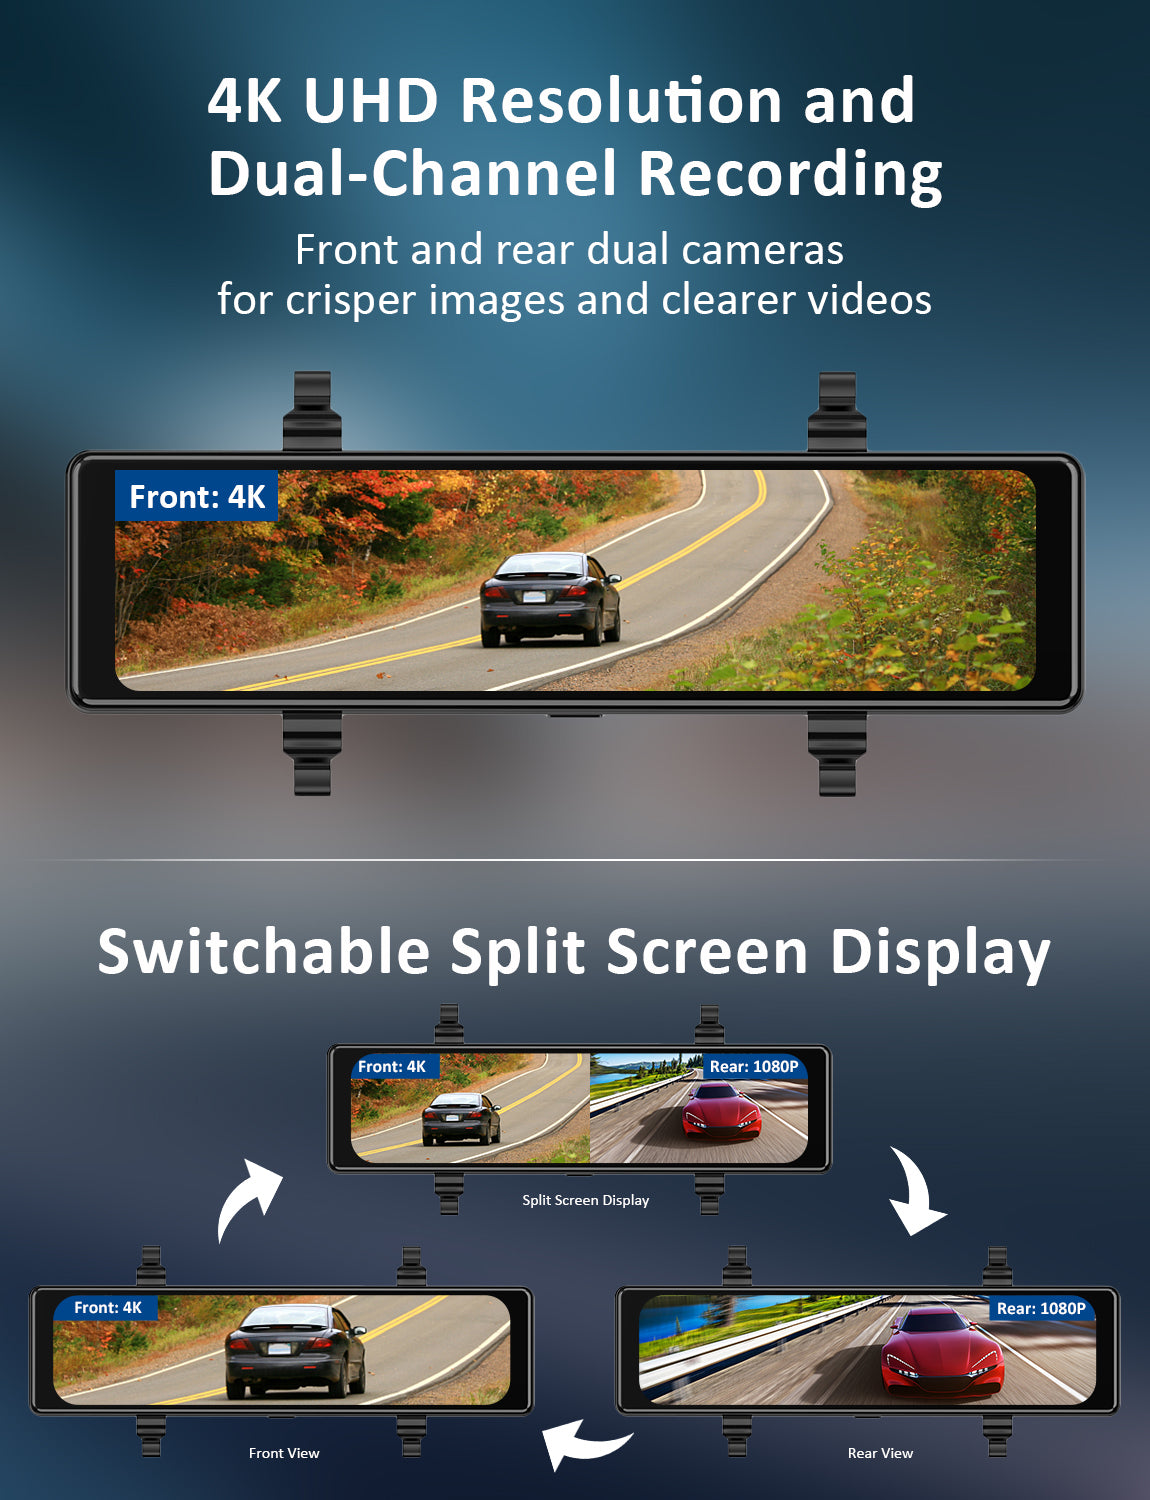 NEXDIGITRON - Ultra HD 4K resolution powered by Sony's best-in